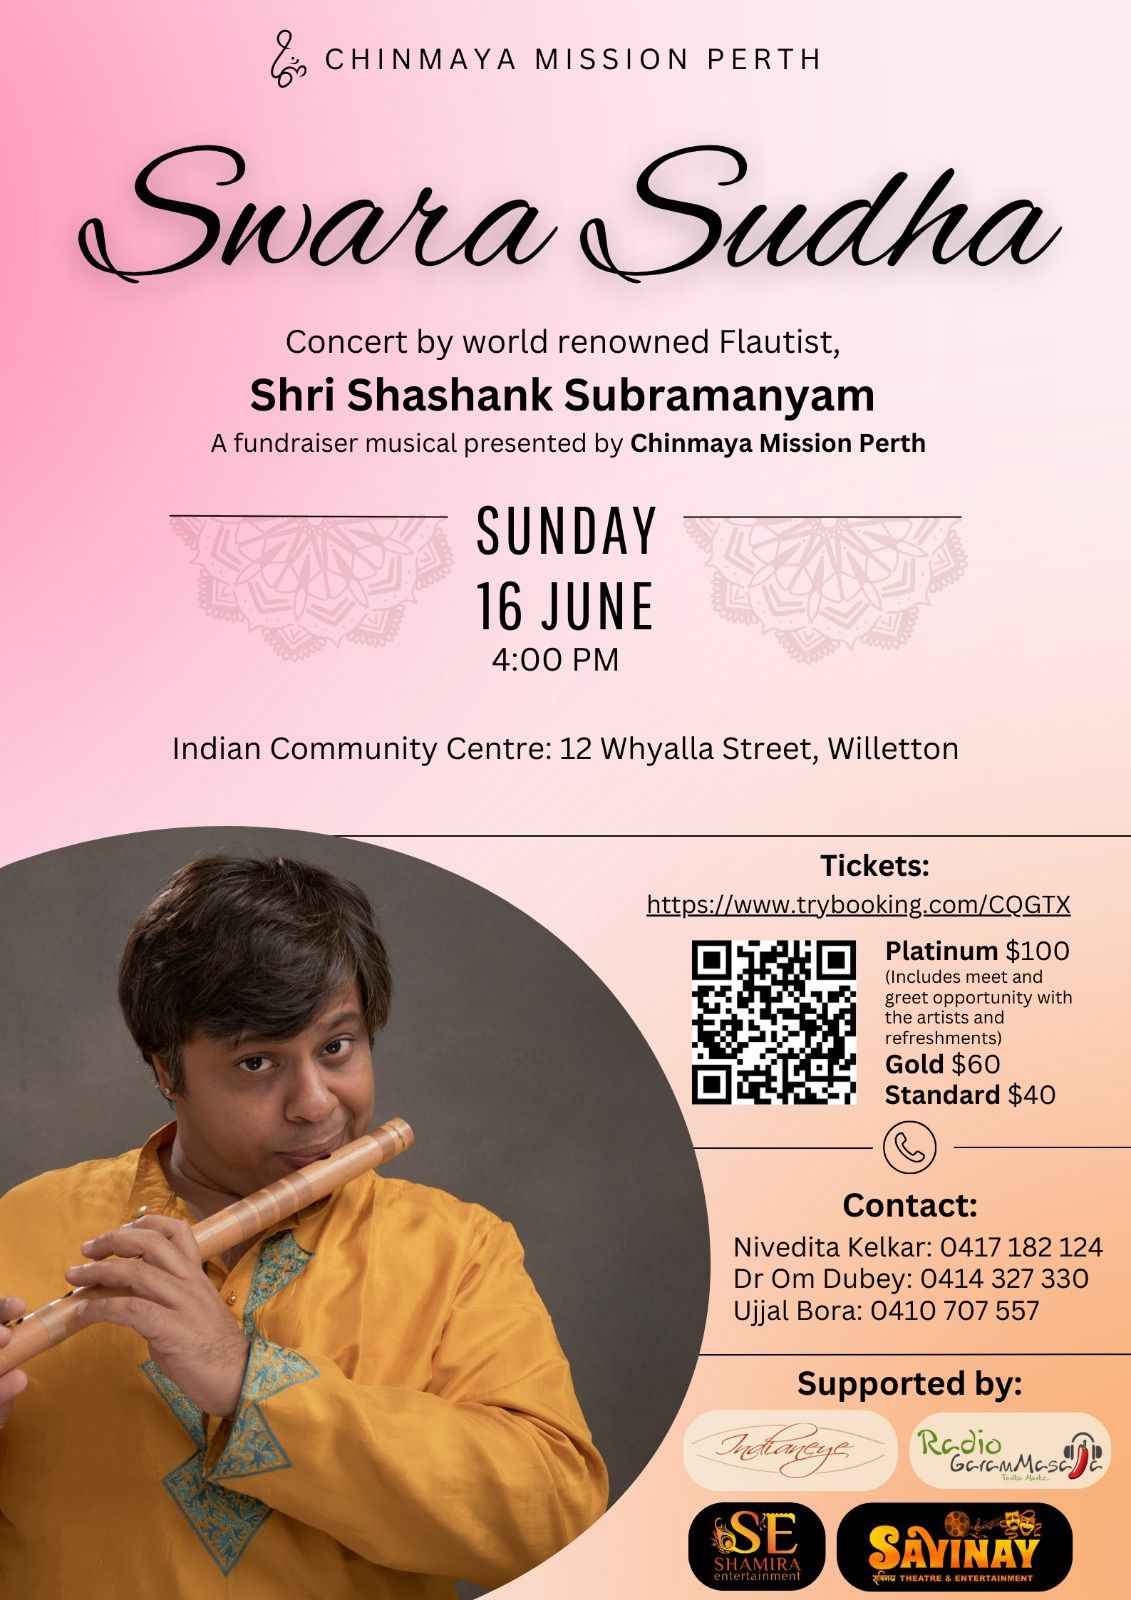 Swara Sudha - A concert by famous flautist, Shri Shashank Subramanyam